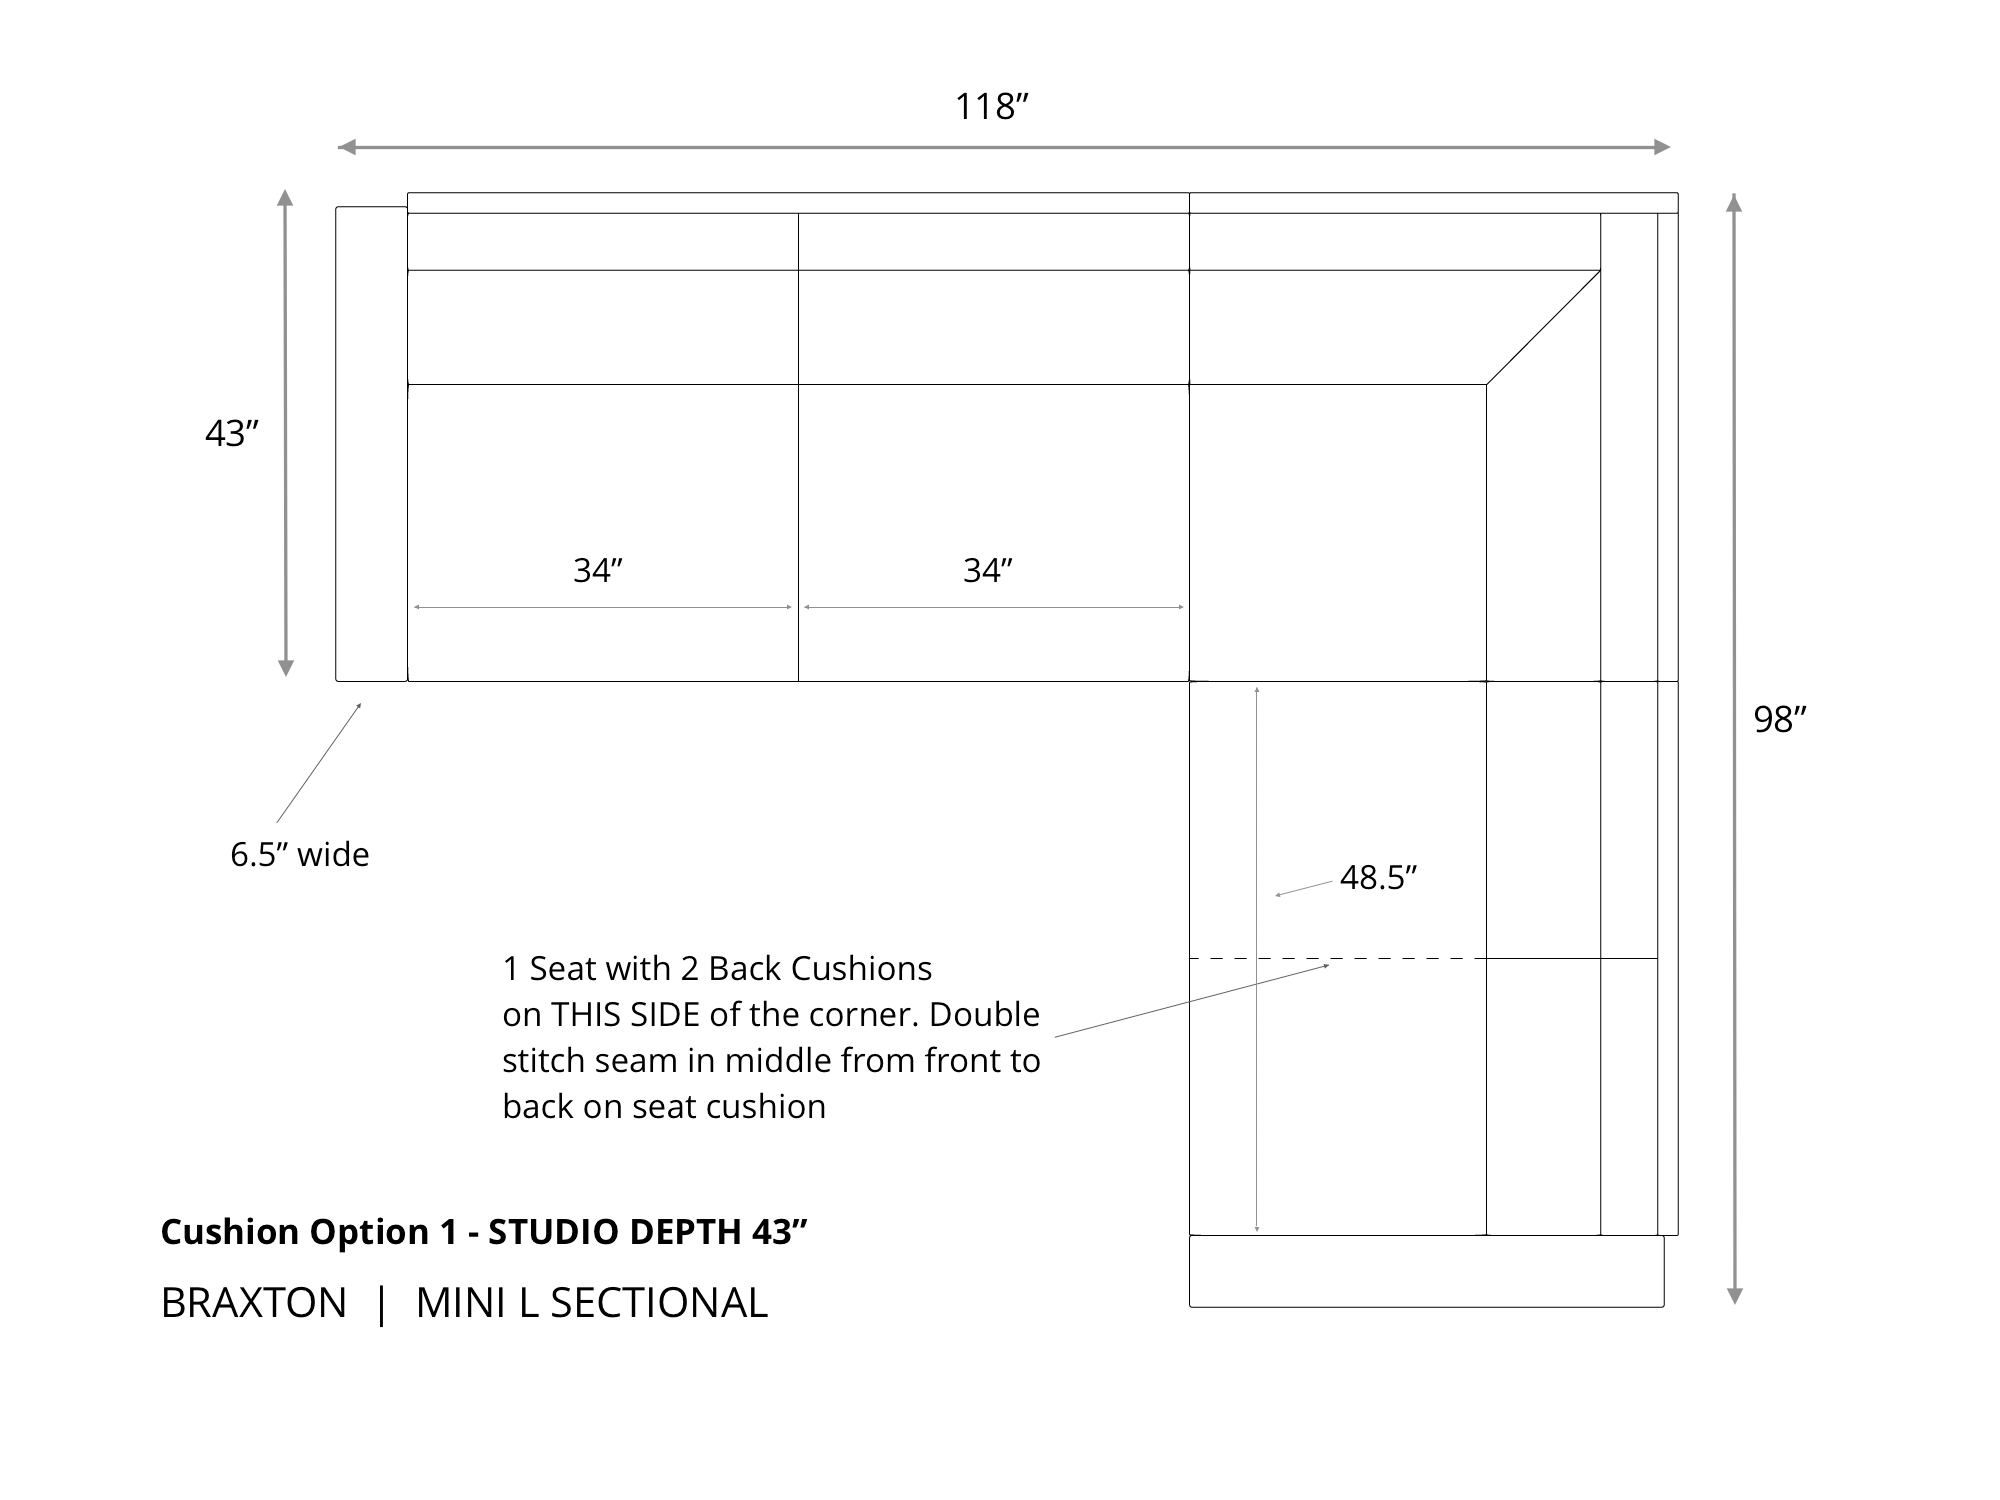 Braxton Mini L Sectional Dimensions - Cushion Option 1 - 46 inch depth